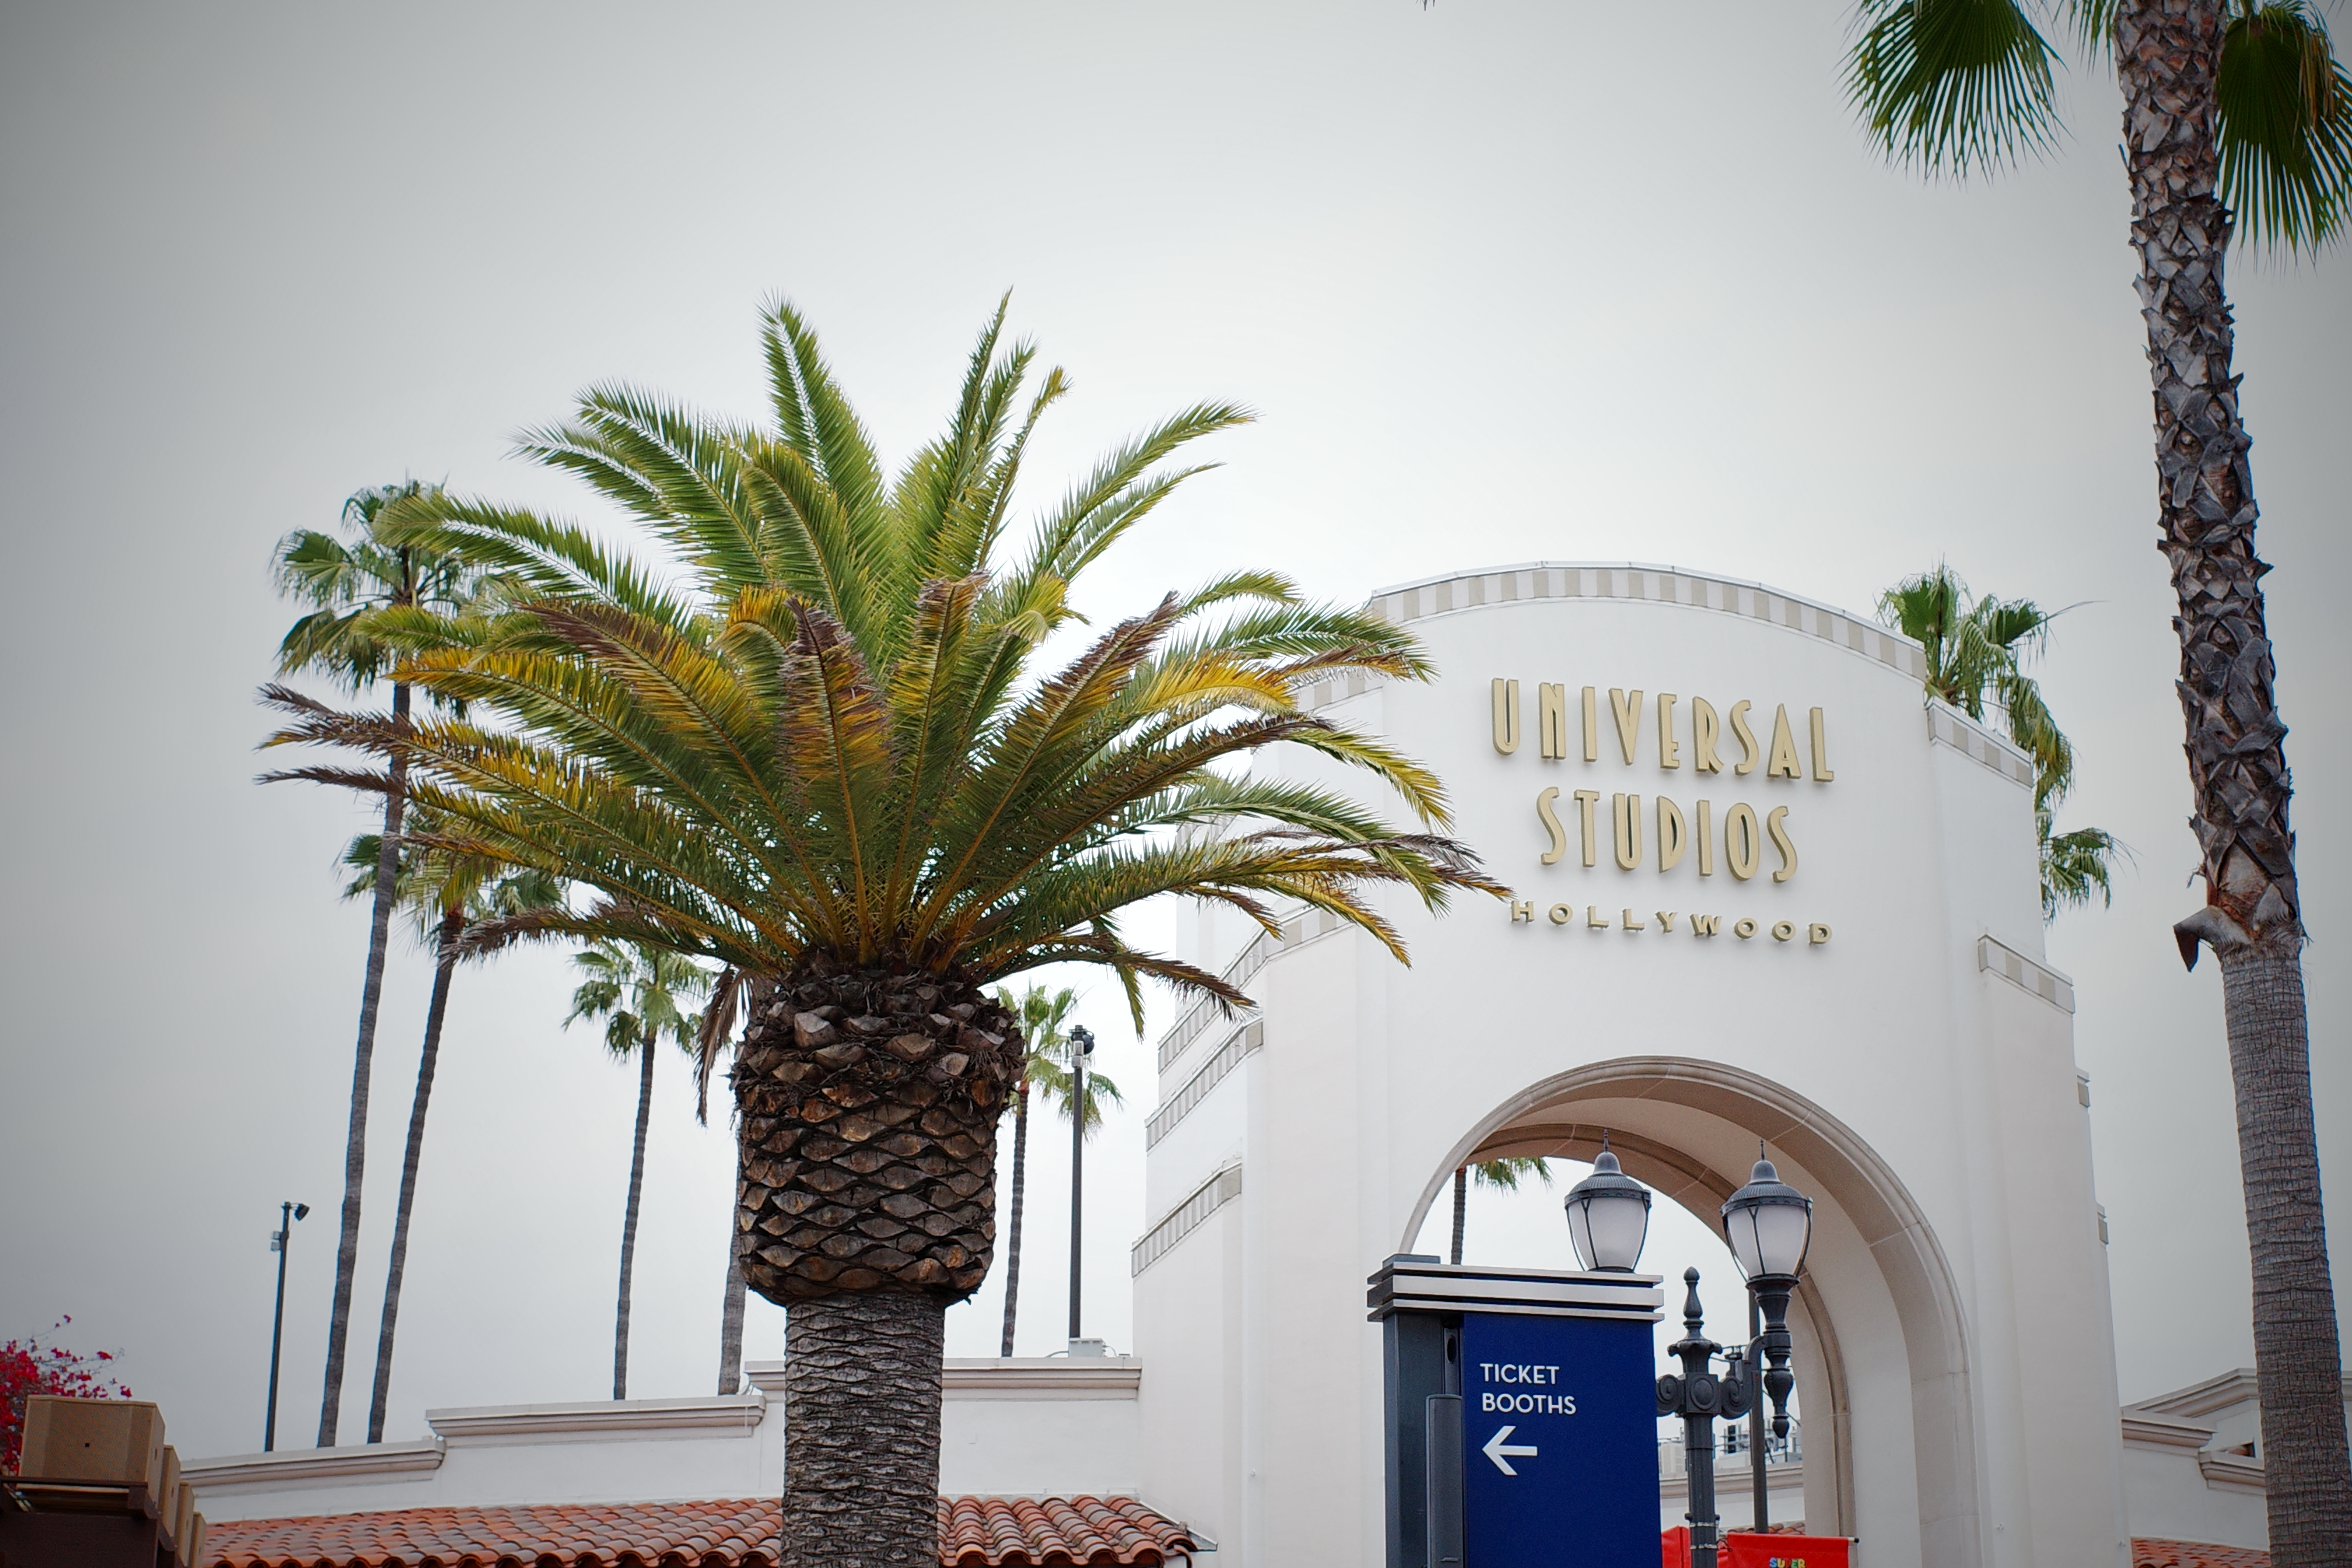 好萊塢環球影城Universal Studios Hollywood 